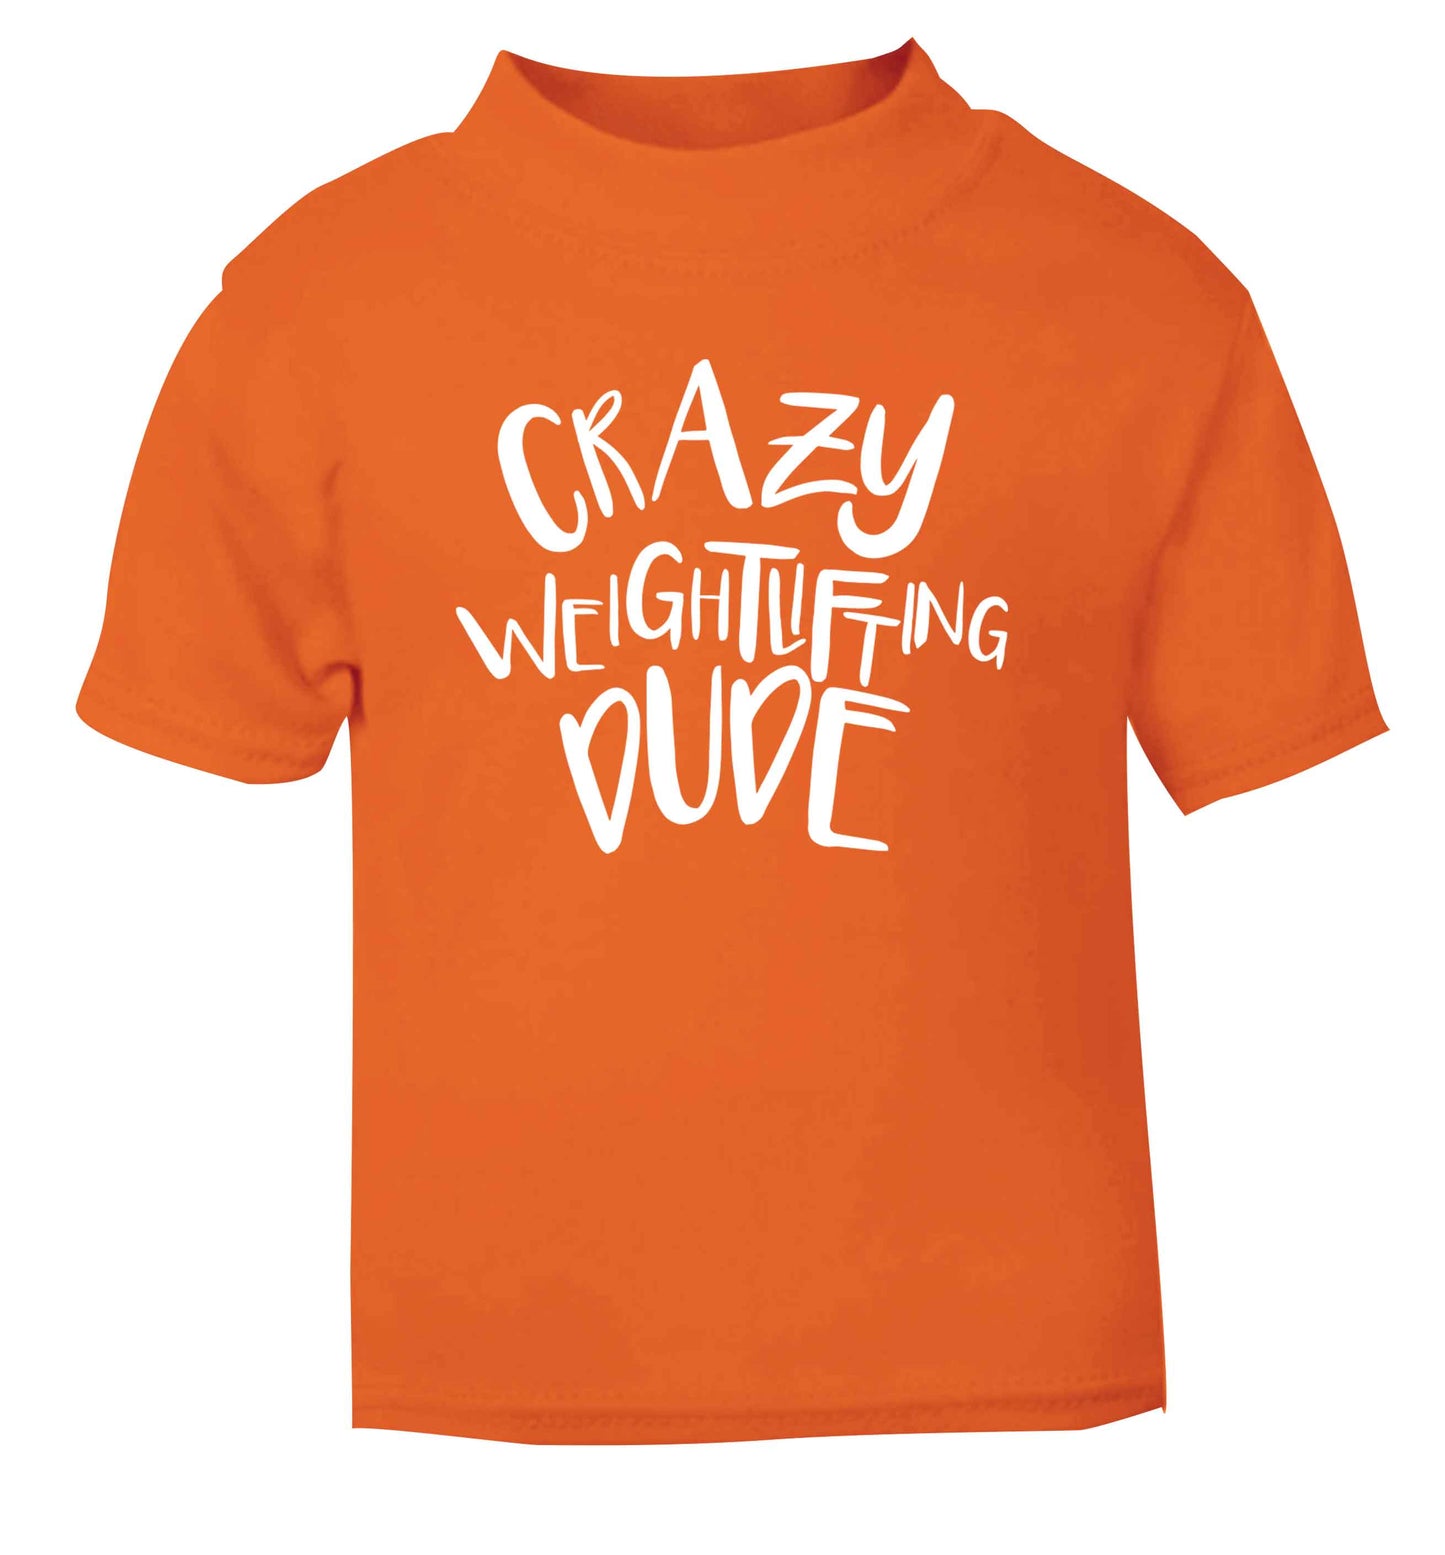 Crazy weightlifting dude orange Baby Toddler Tshirt 2 Years